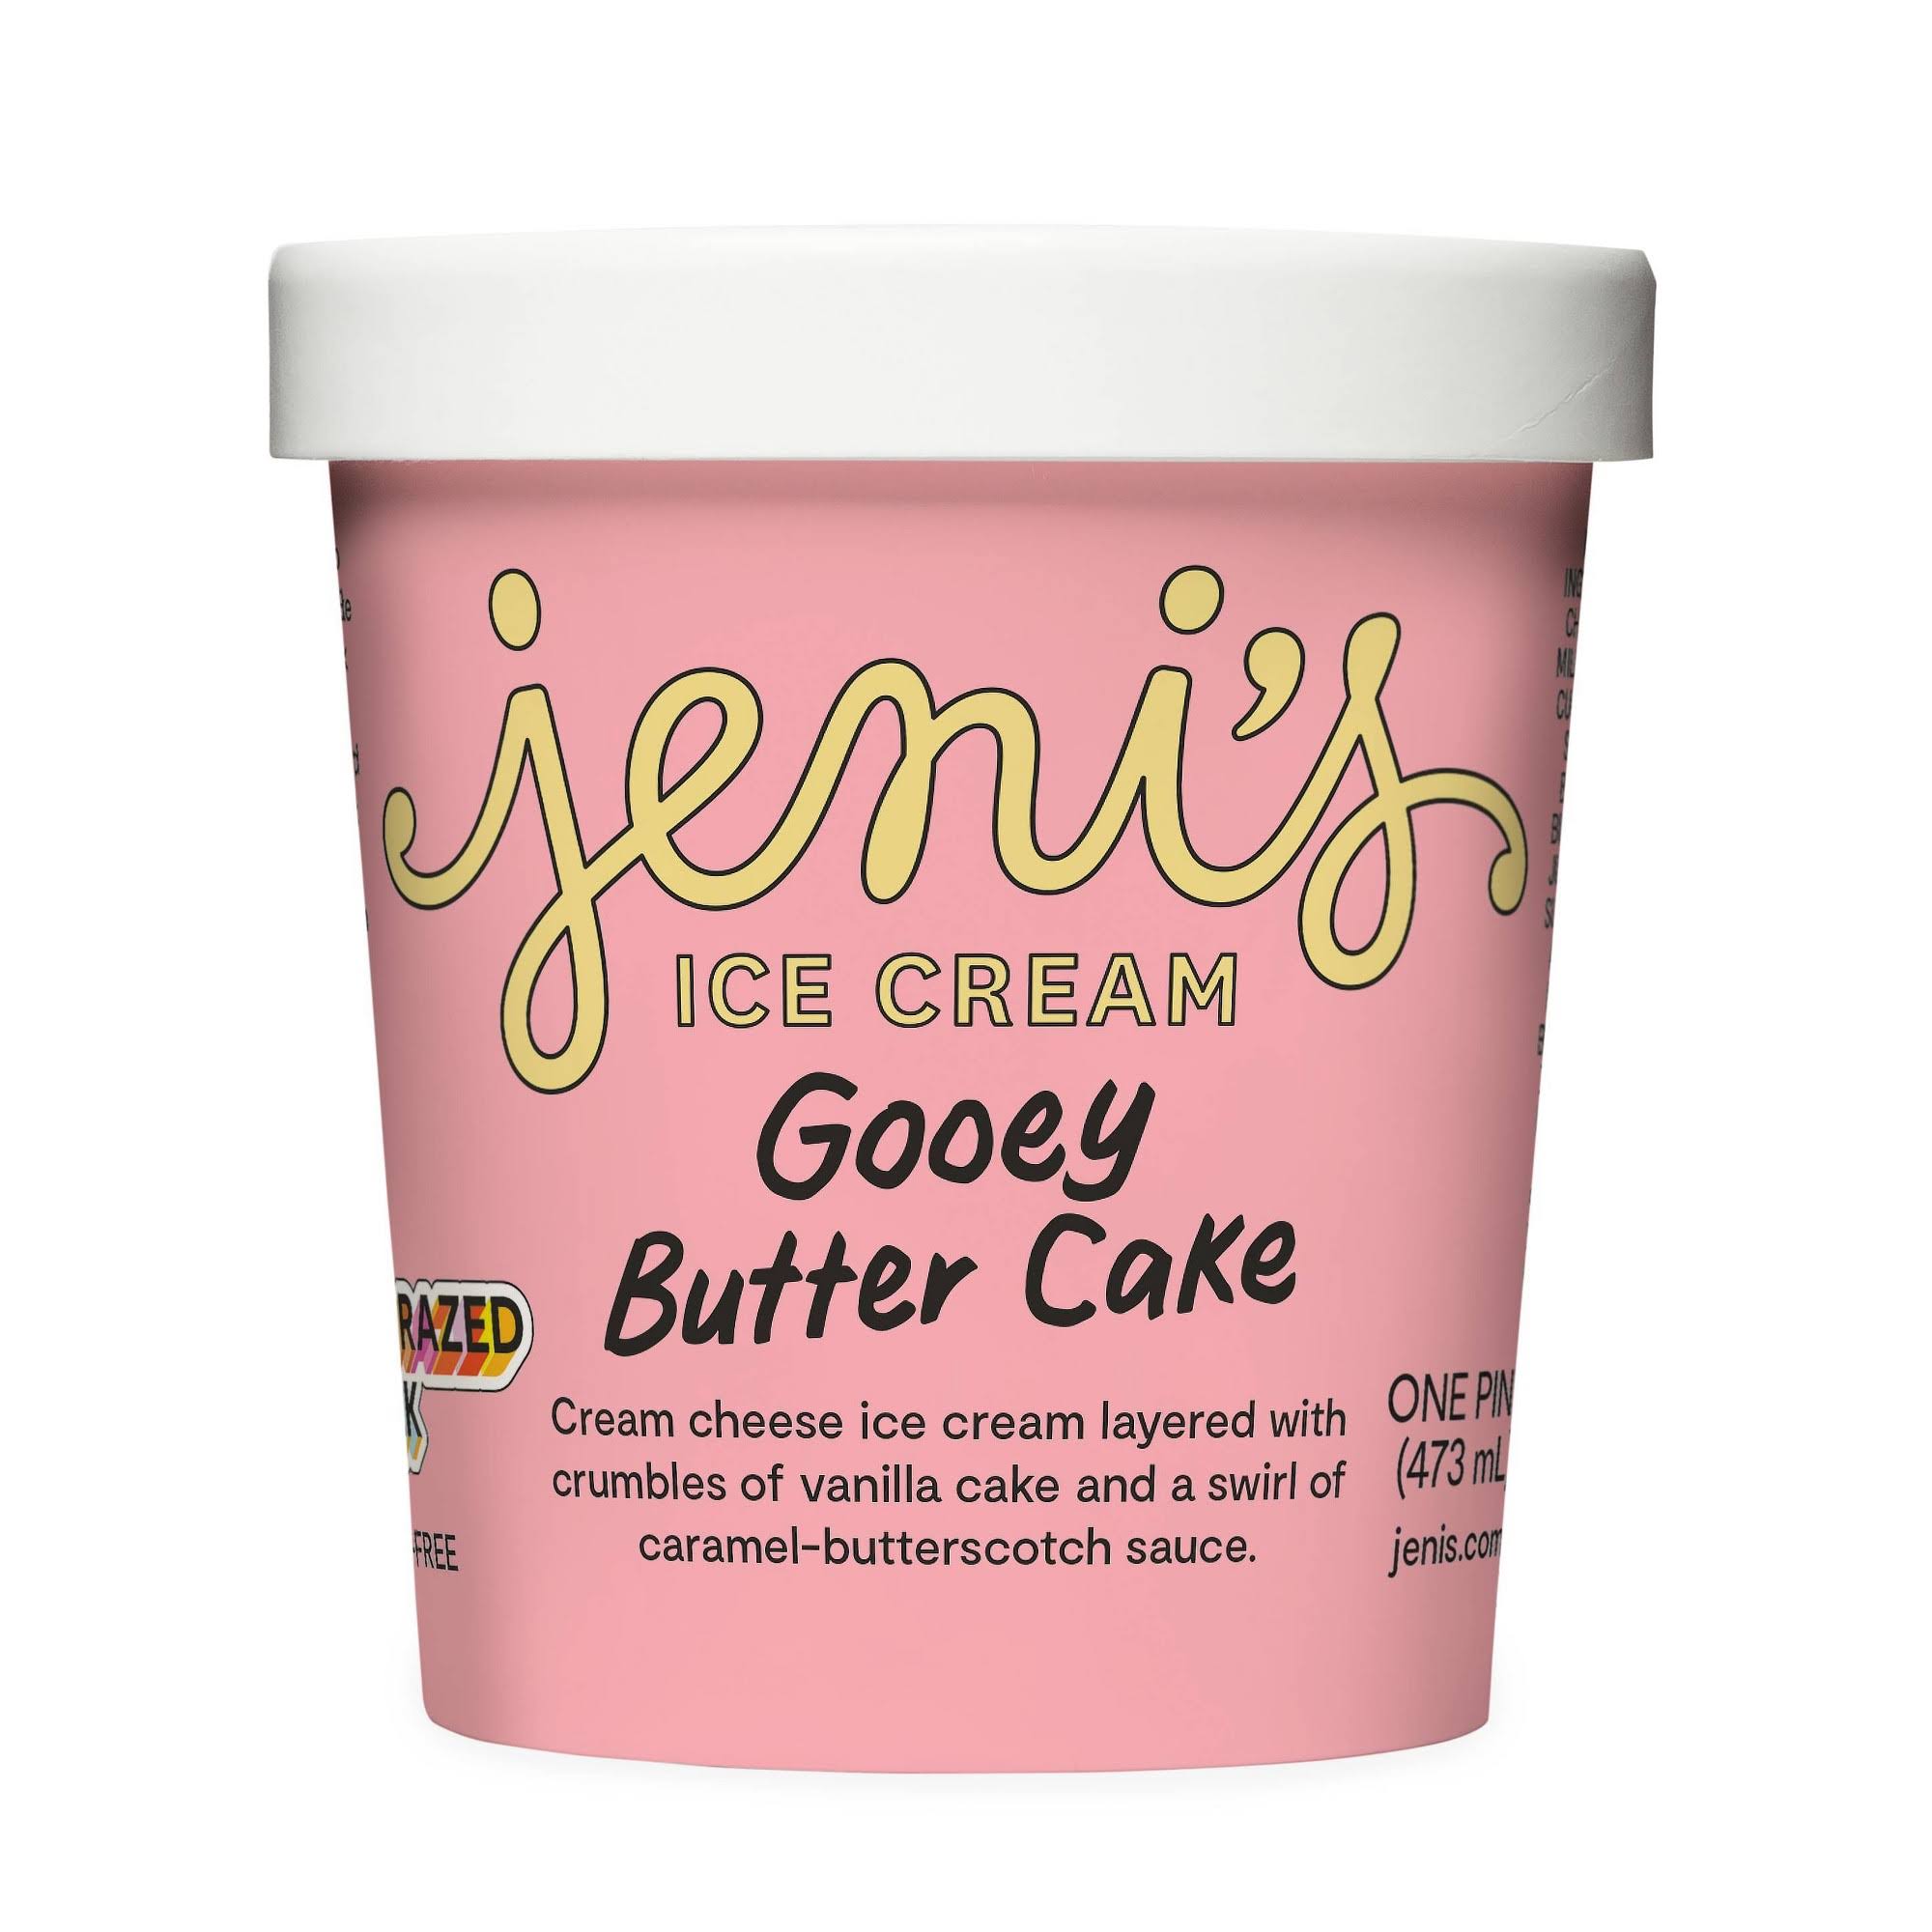 Jeni's Ice Cream, Gooey Butter Cake - one pint (473 ml)